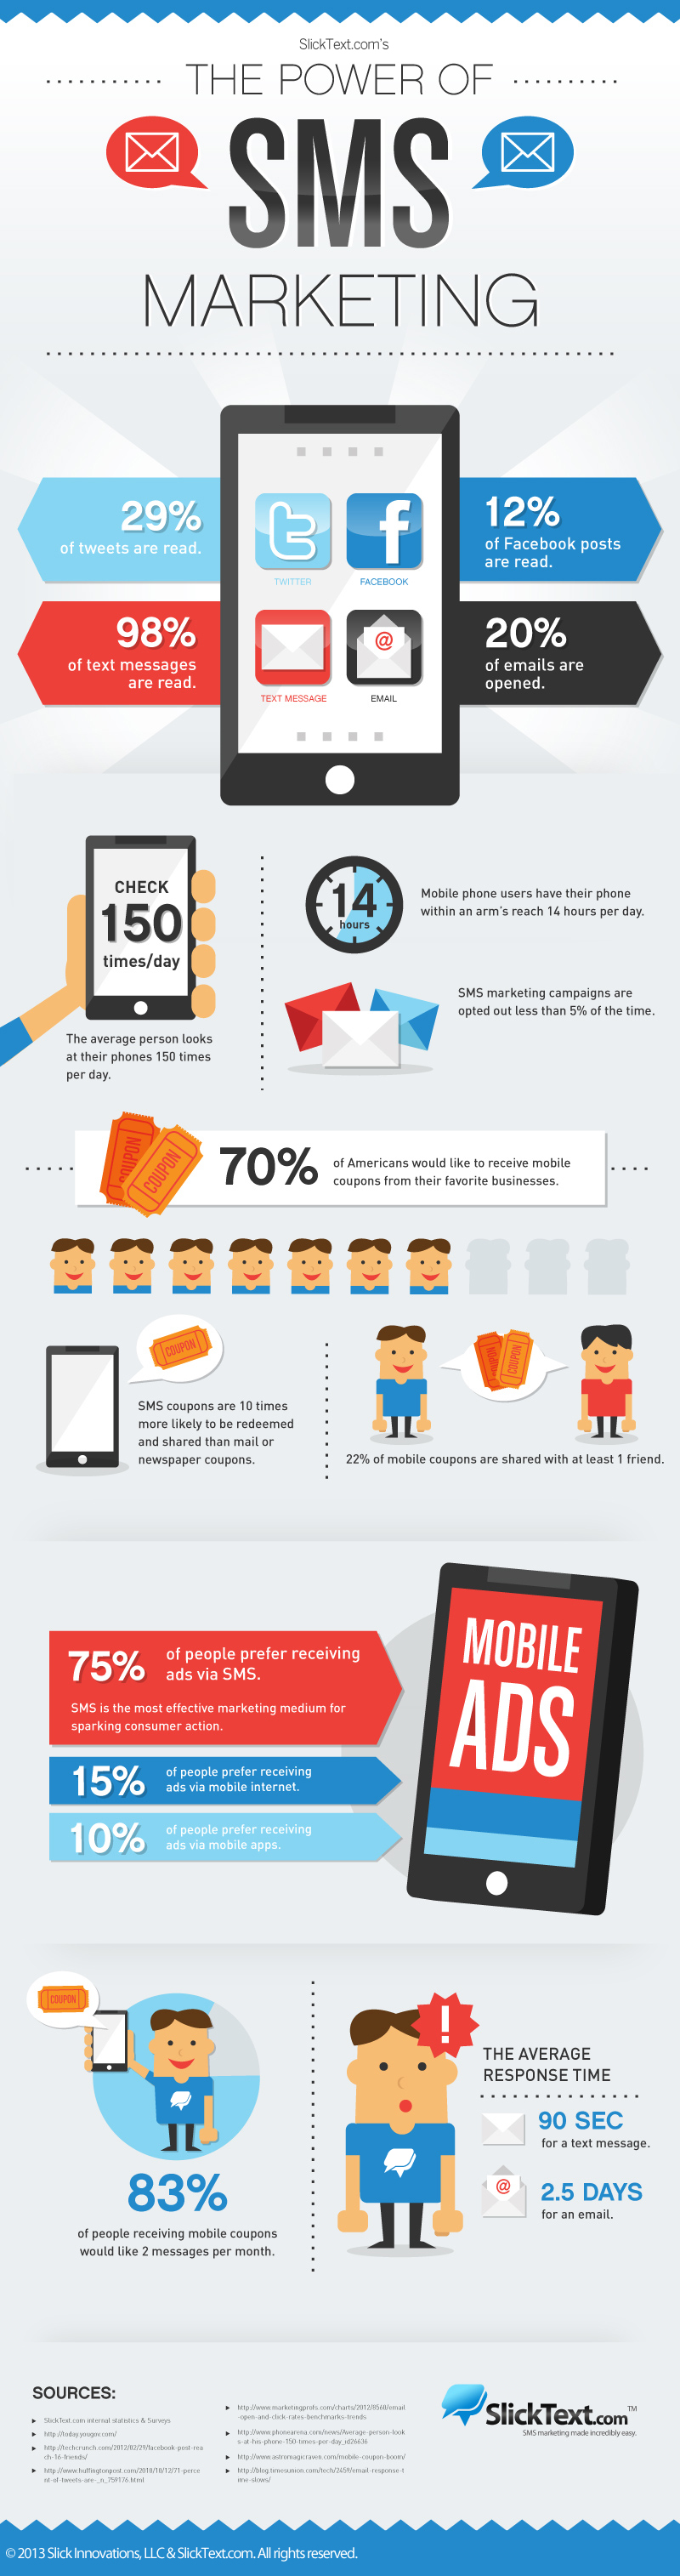 sms-marketing-infographic1[1].jpg